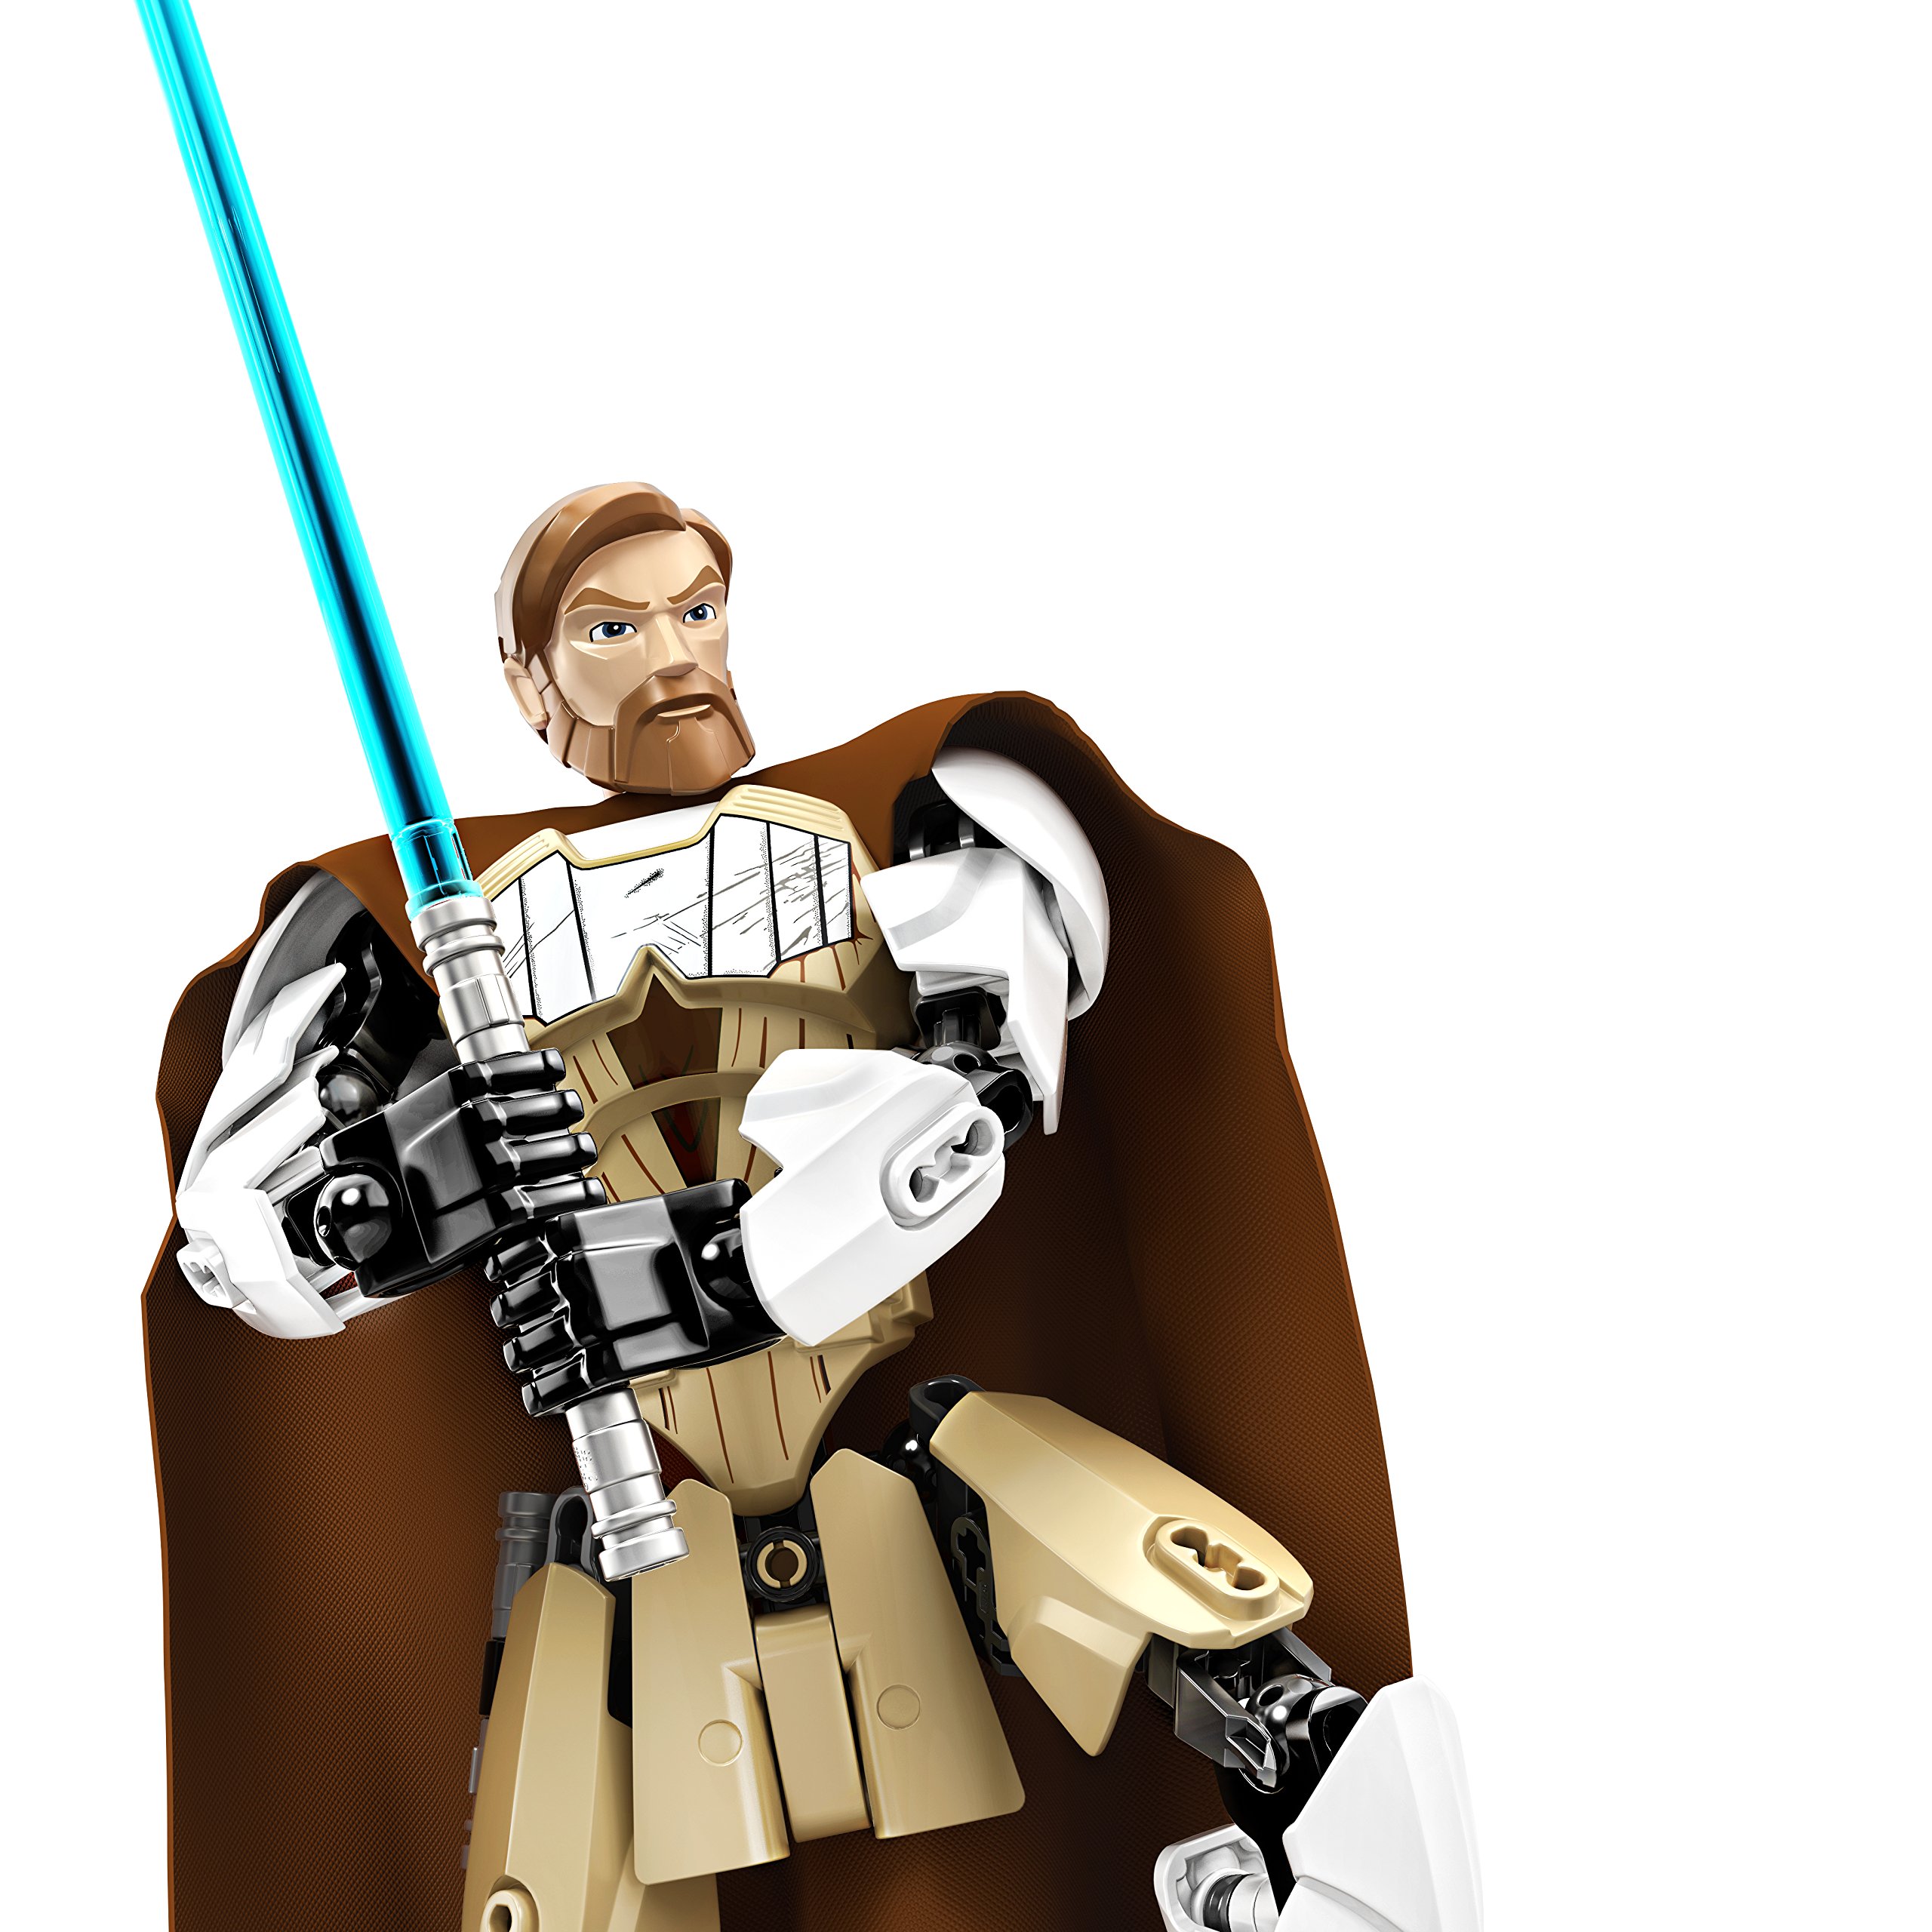 LEGO Star Wars 75109 OBI-Wan Kenobi Building Kit